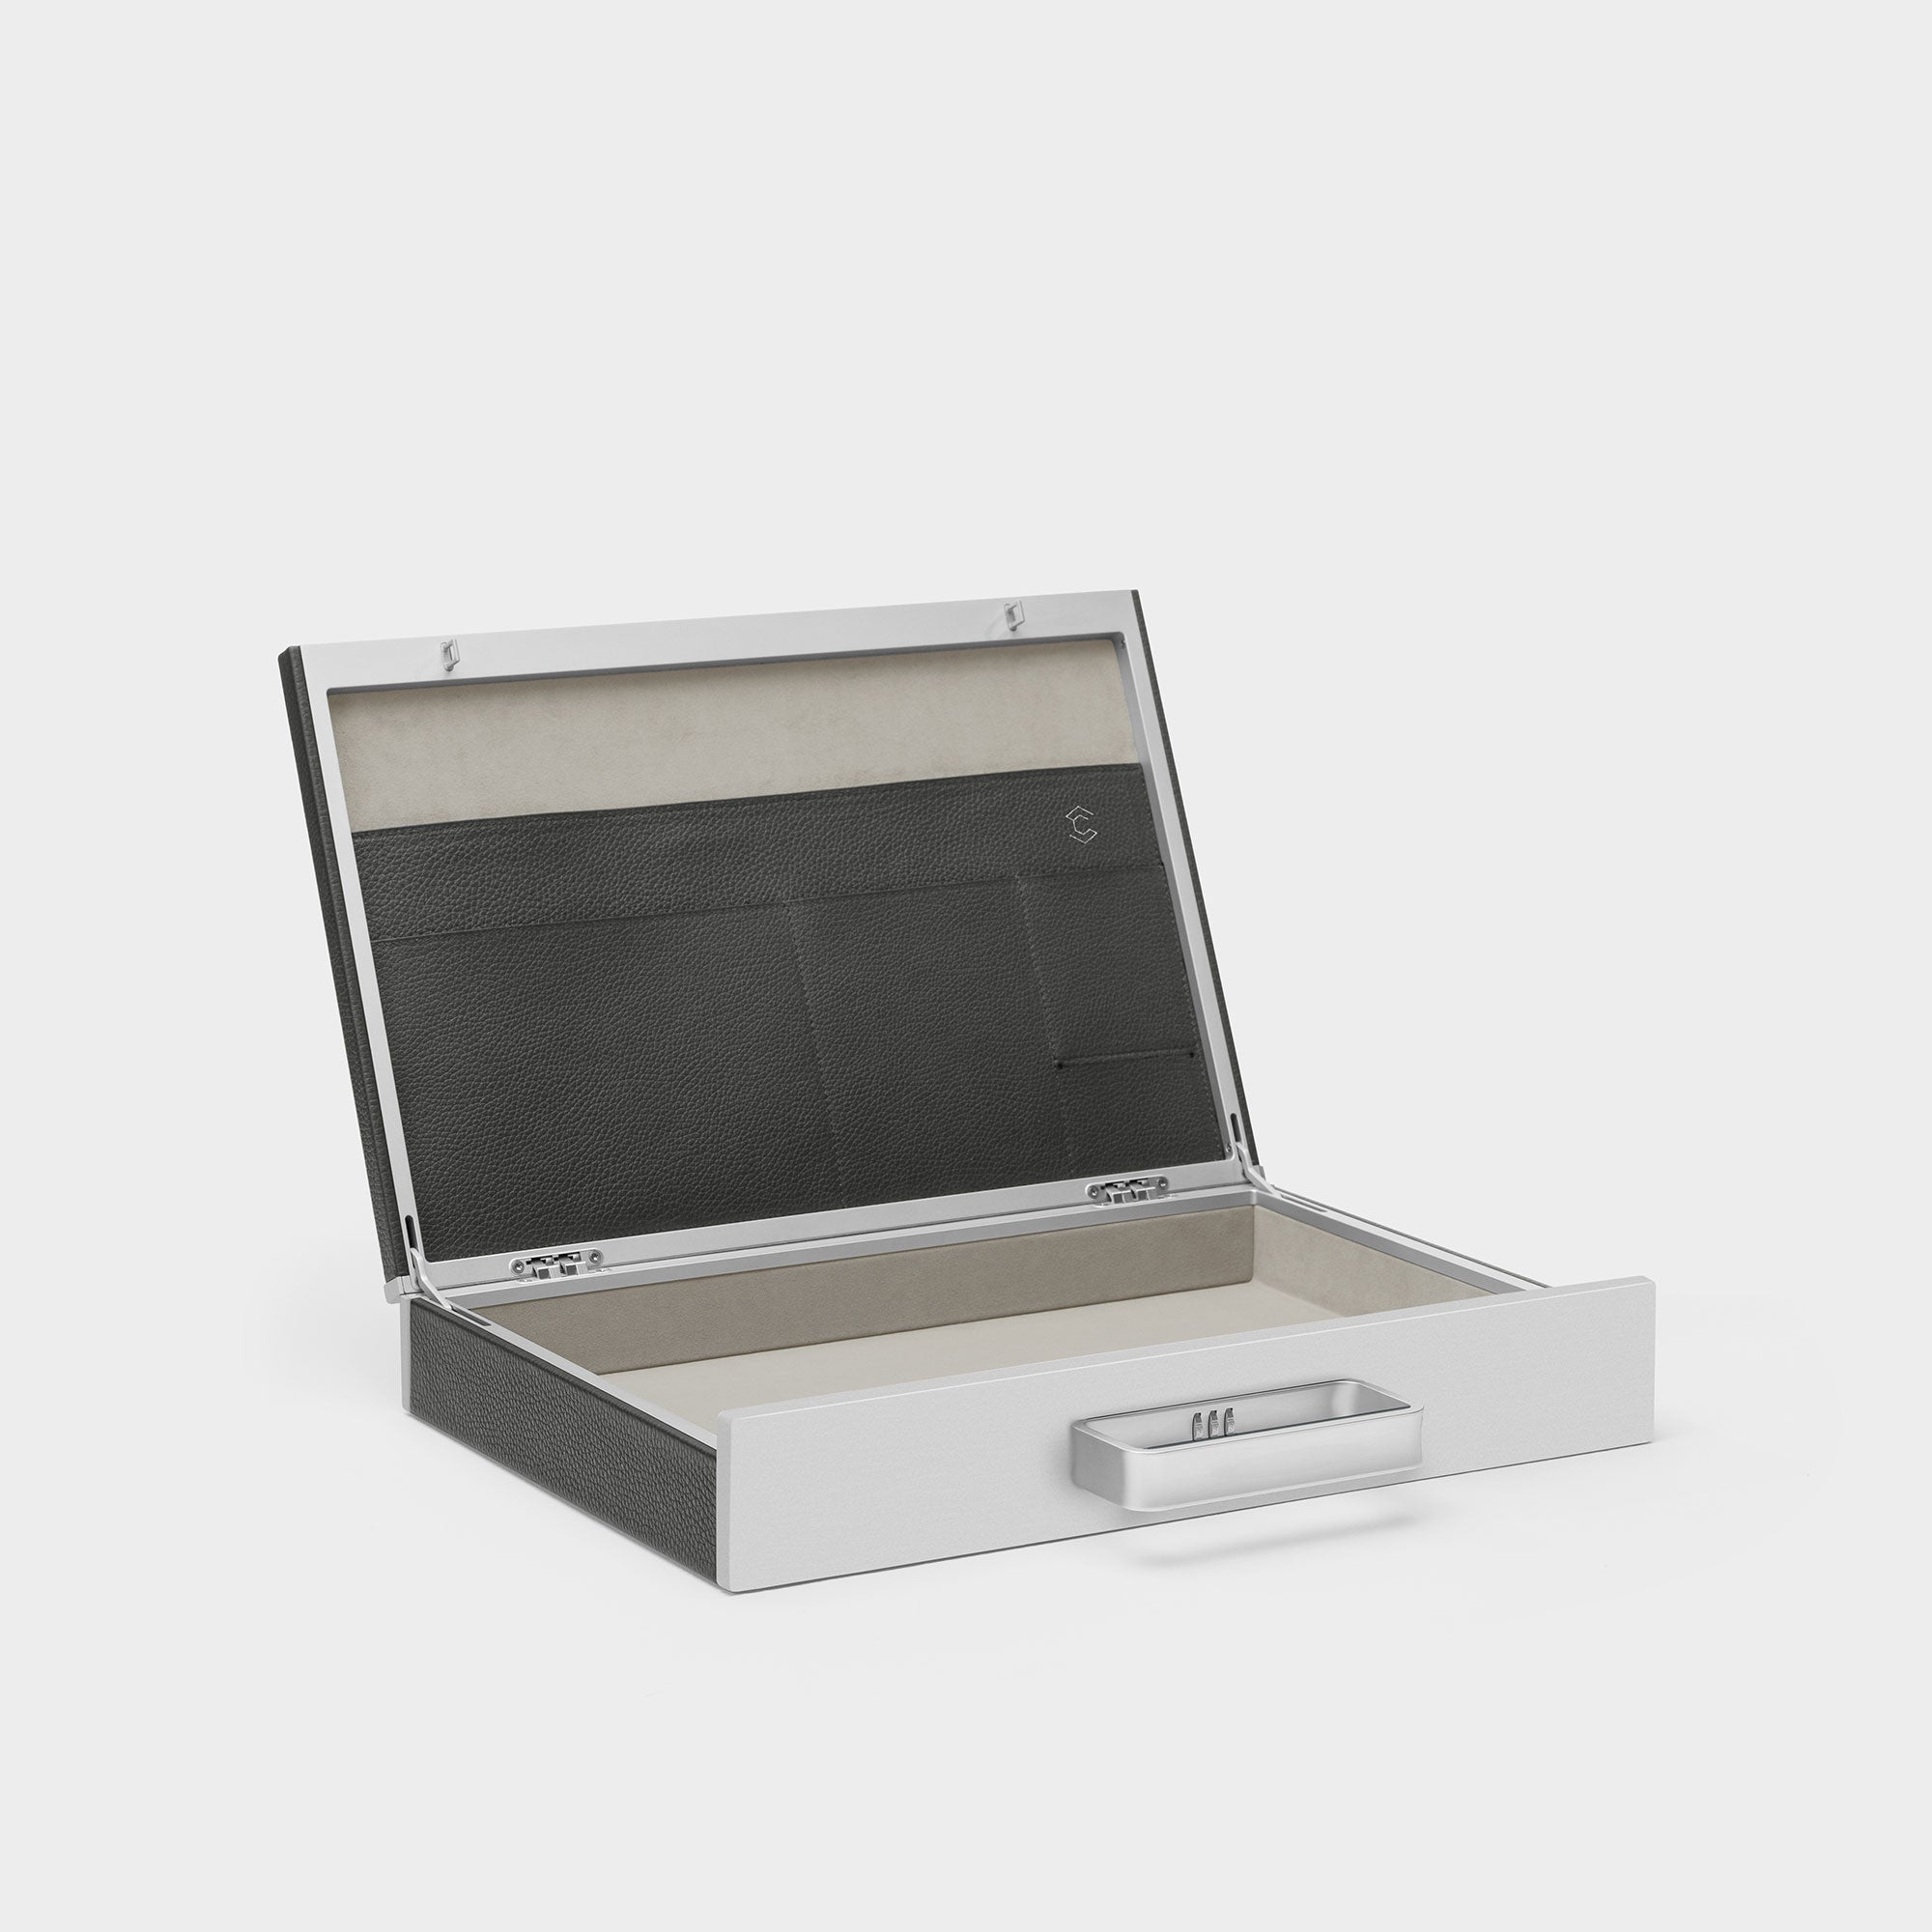 Open Mackenzie briefcase in graphite with Sea sand Alcantara interior